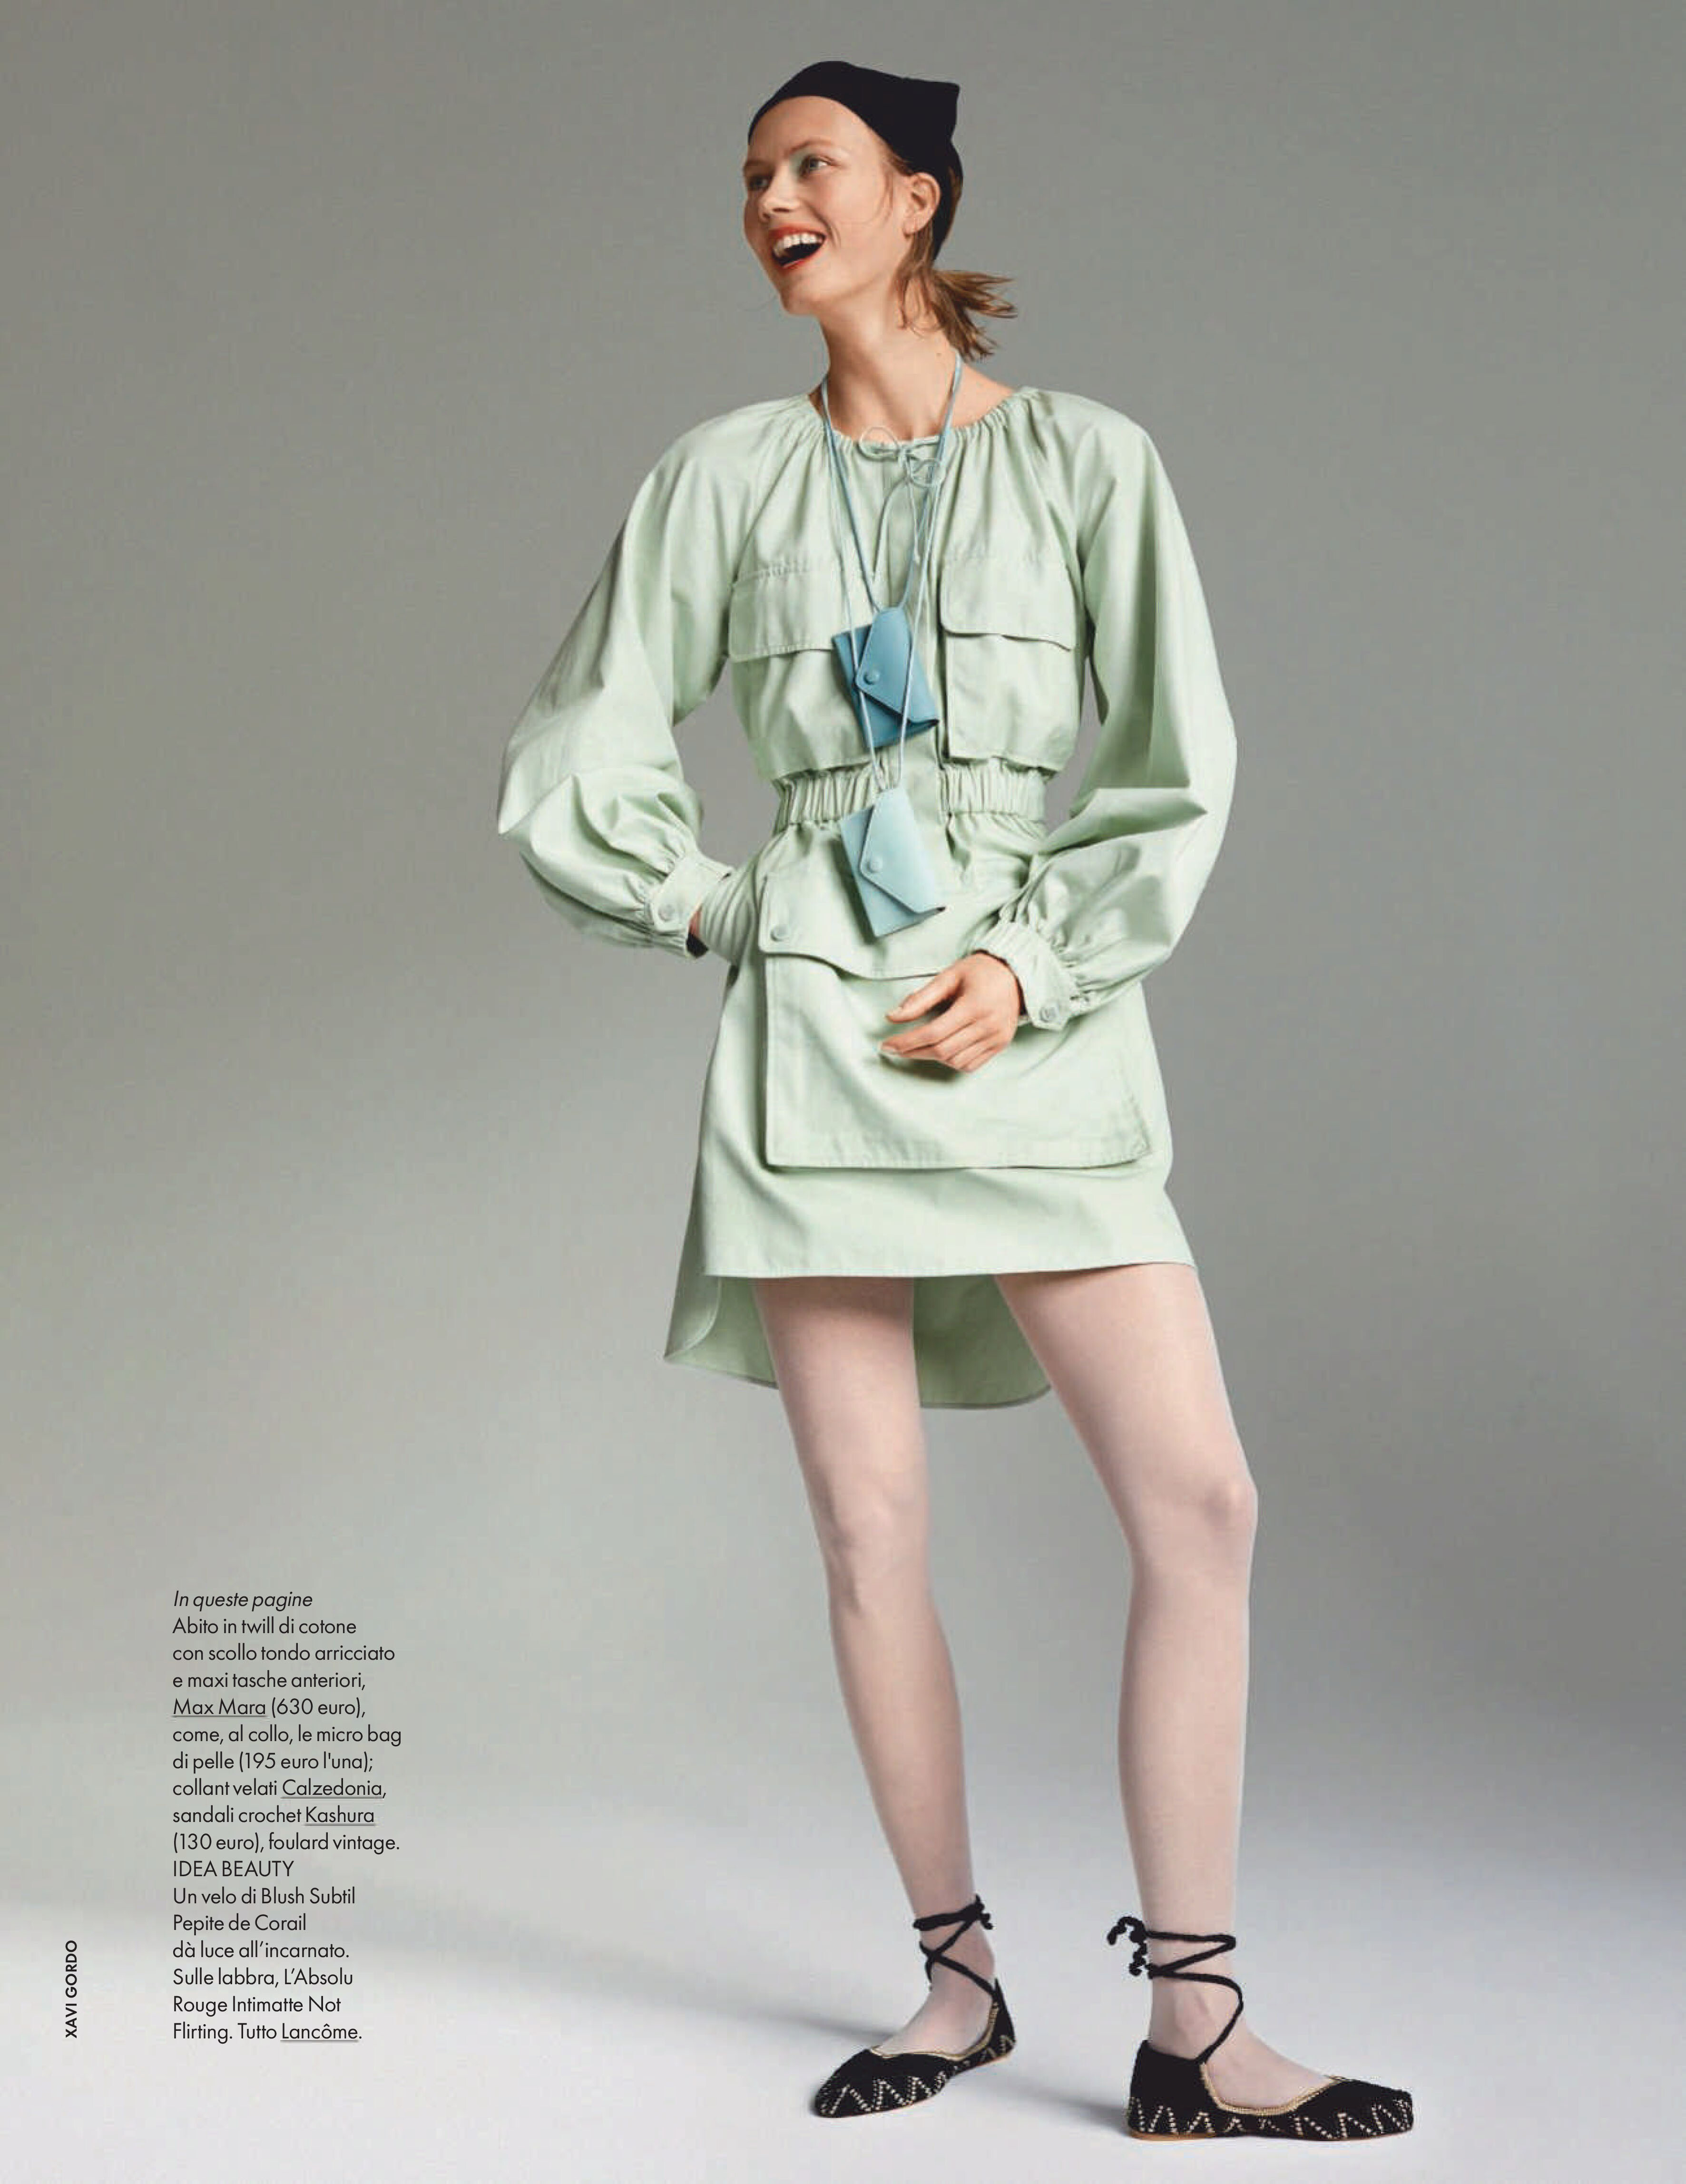 Julie Hoomans - Page 14 - Female Fashion Models - Bellazon